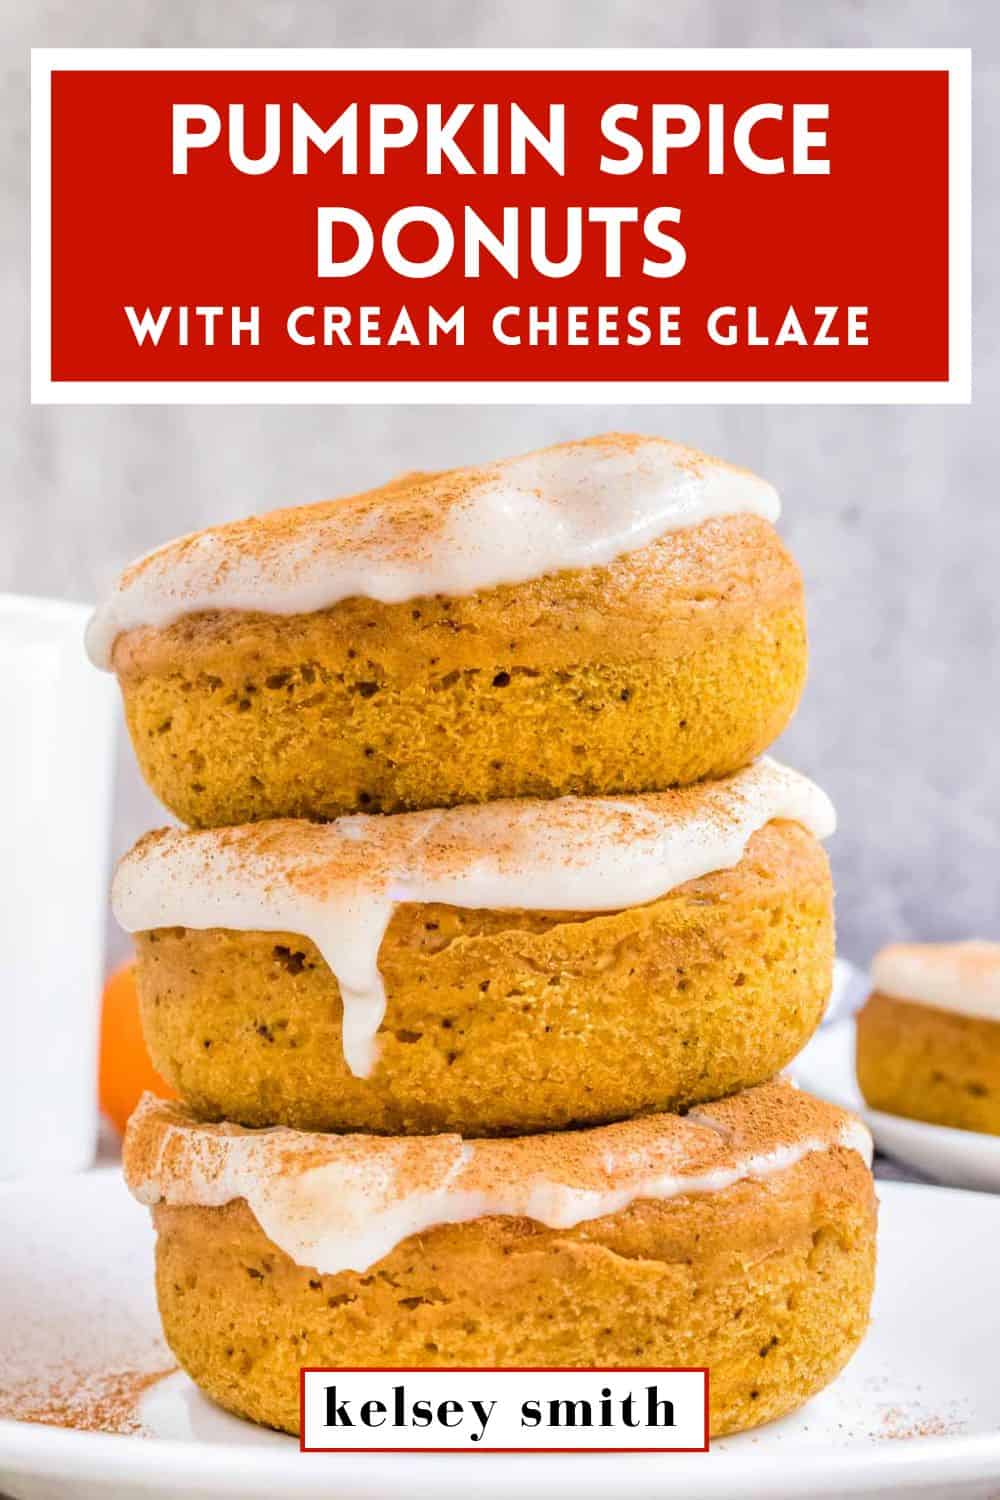 pumpkin spice donuts with cream cheese glaze.